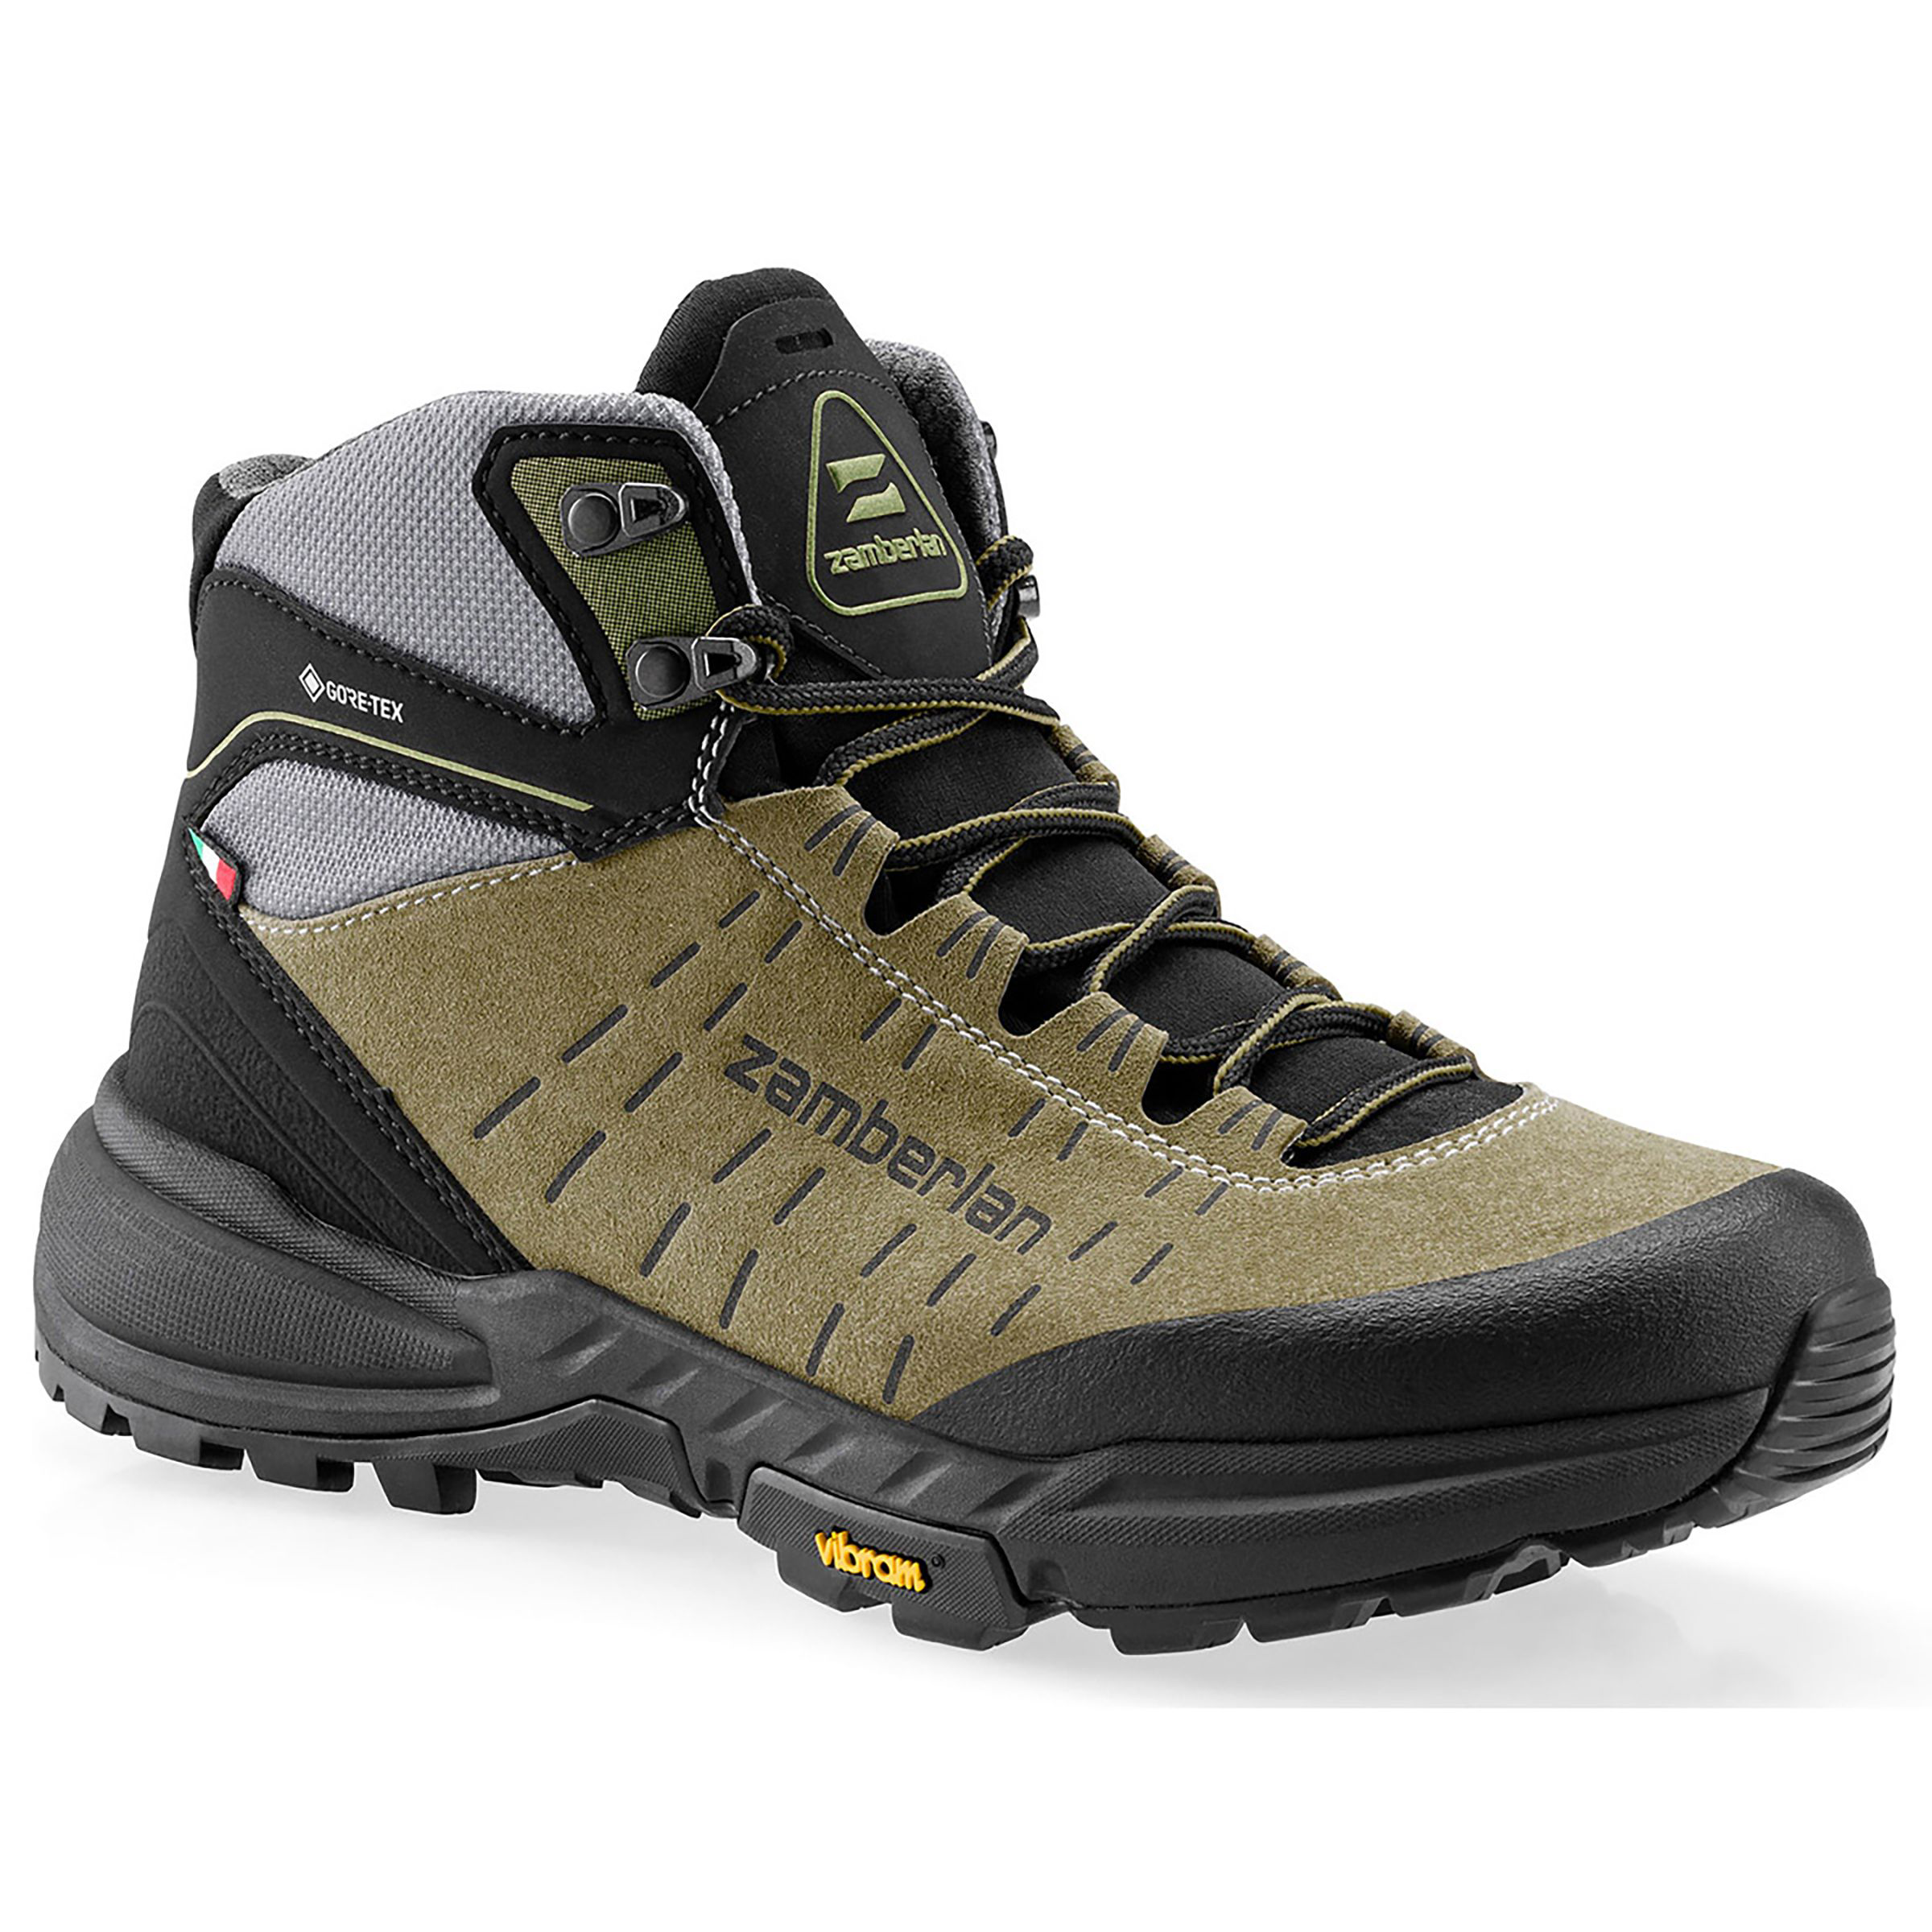 Zamberlan 334 Circe GTX Waterproof Hiking Boots for Ladies - Green - 7M